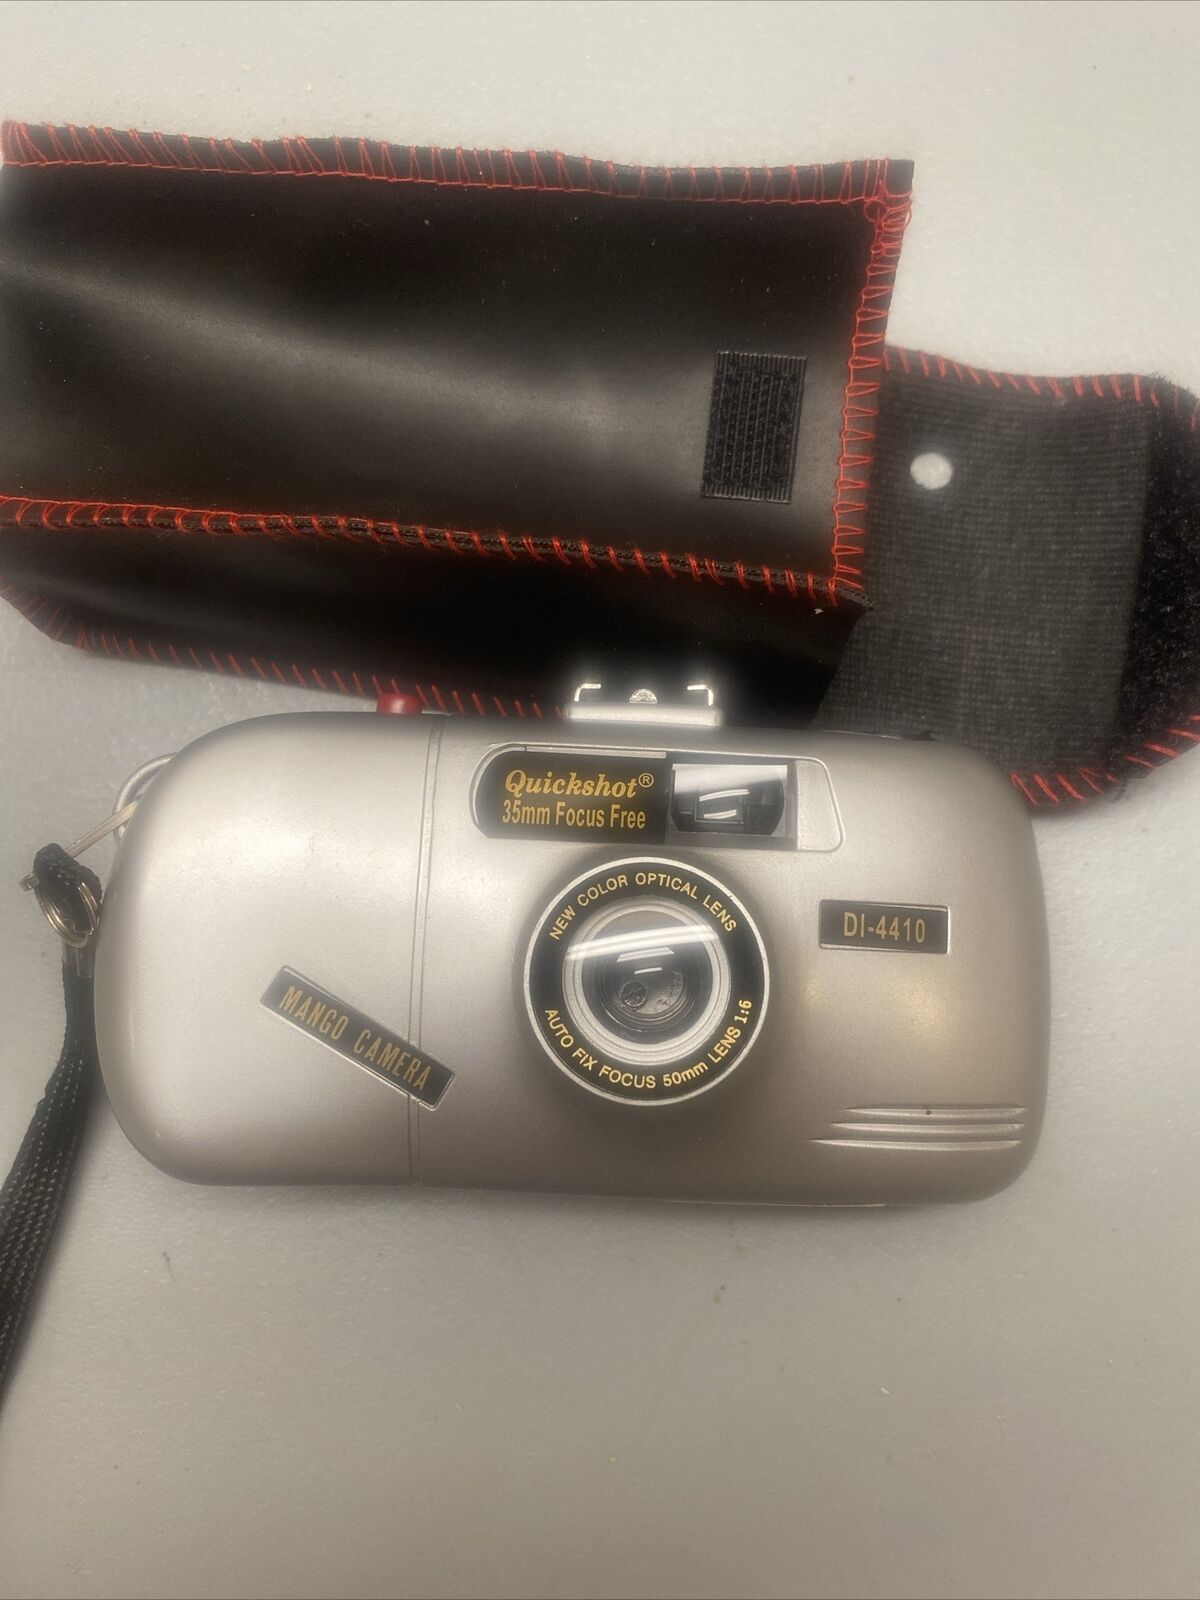 QuickShot 35mm DI-4410 Mango Point & Shoot Camera Focus Free With Case 